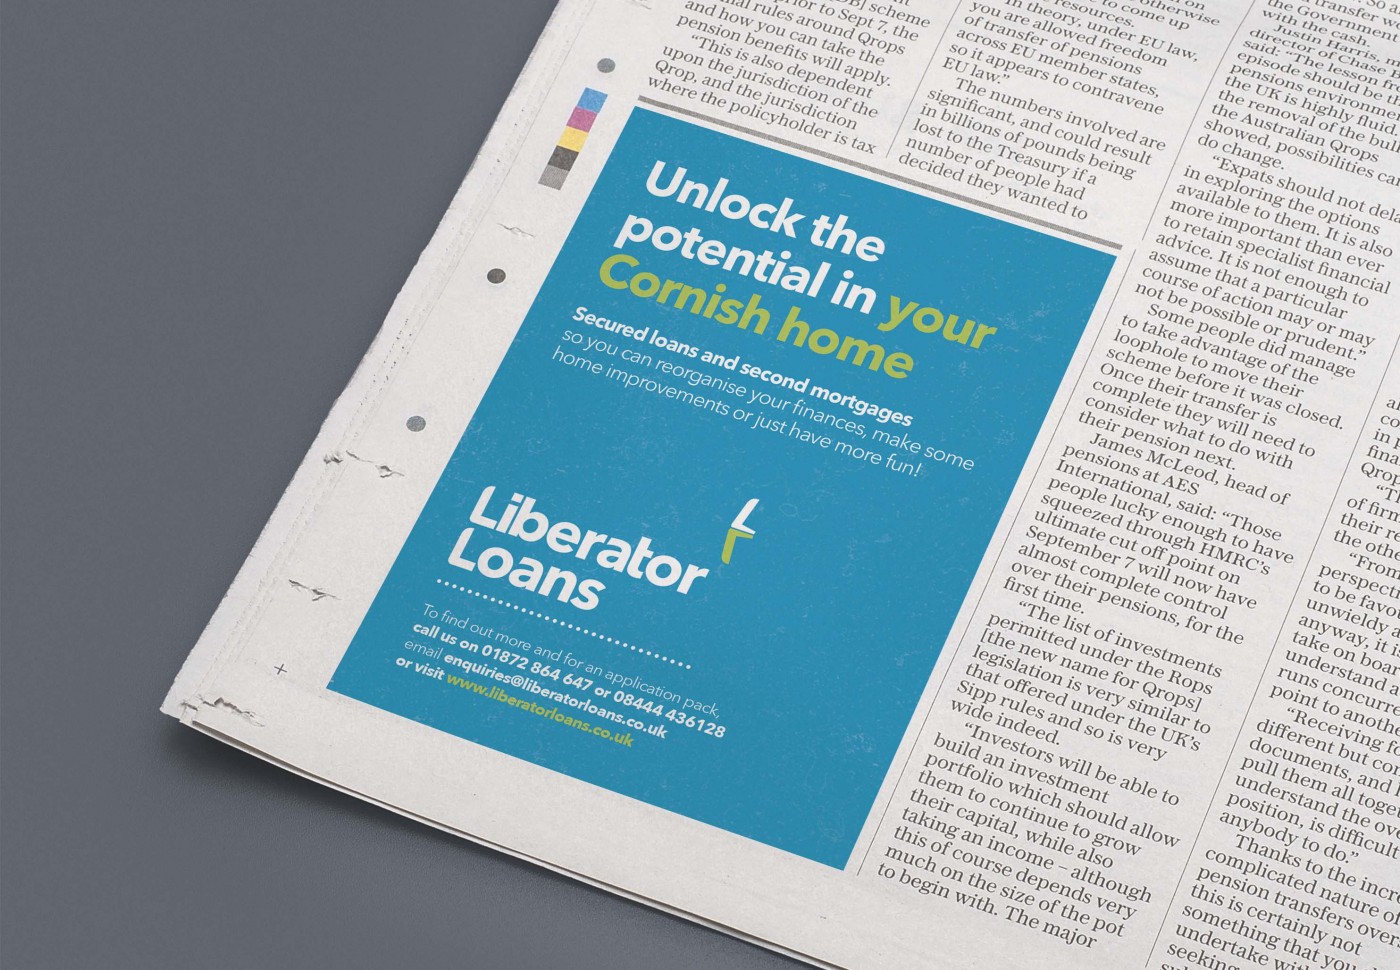 liberator loans advert design